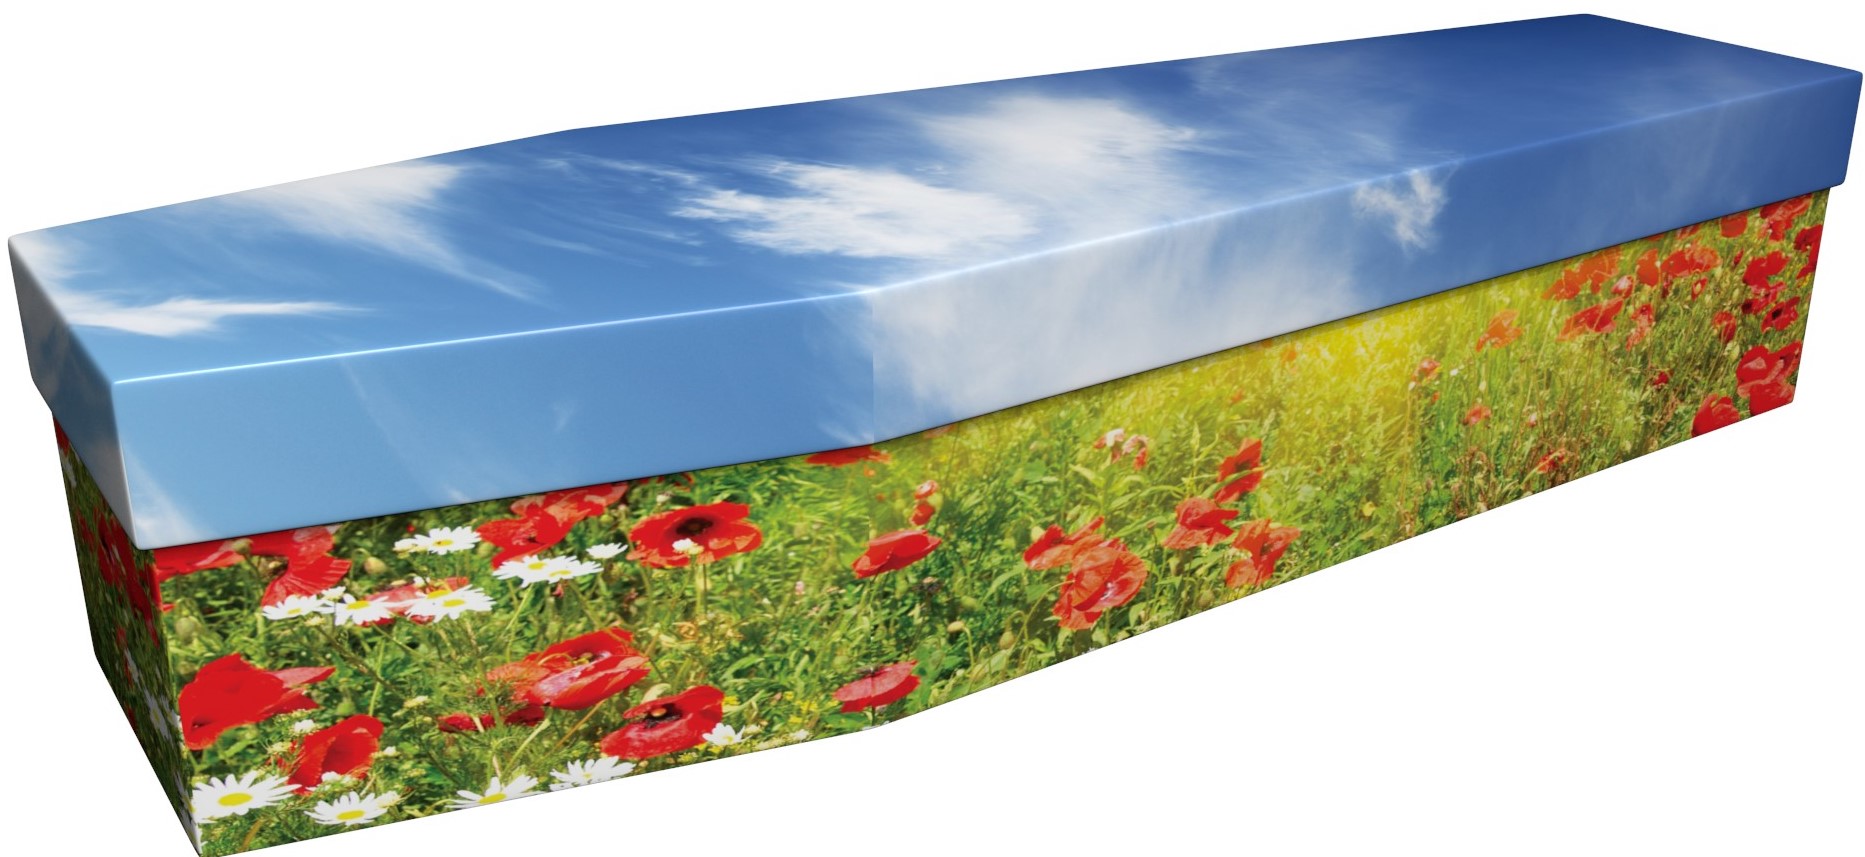 Standard Cardboard Coffin Picture Range